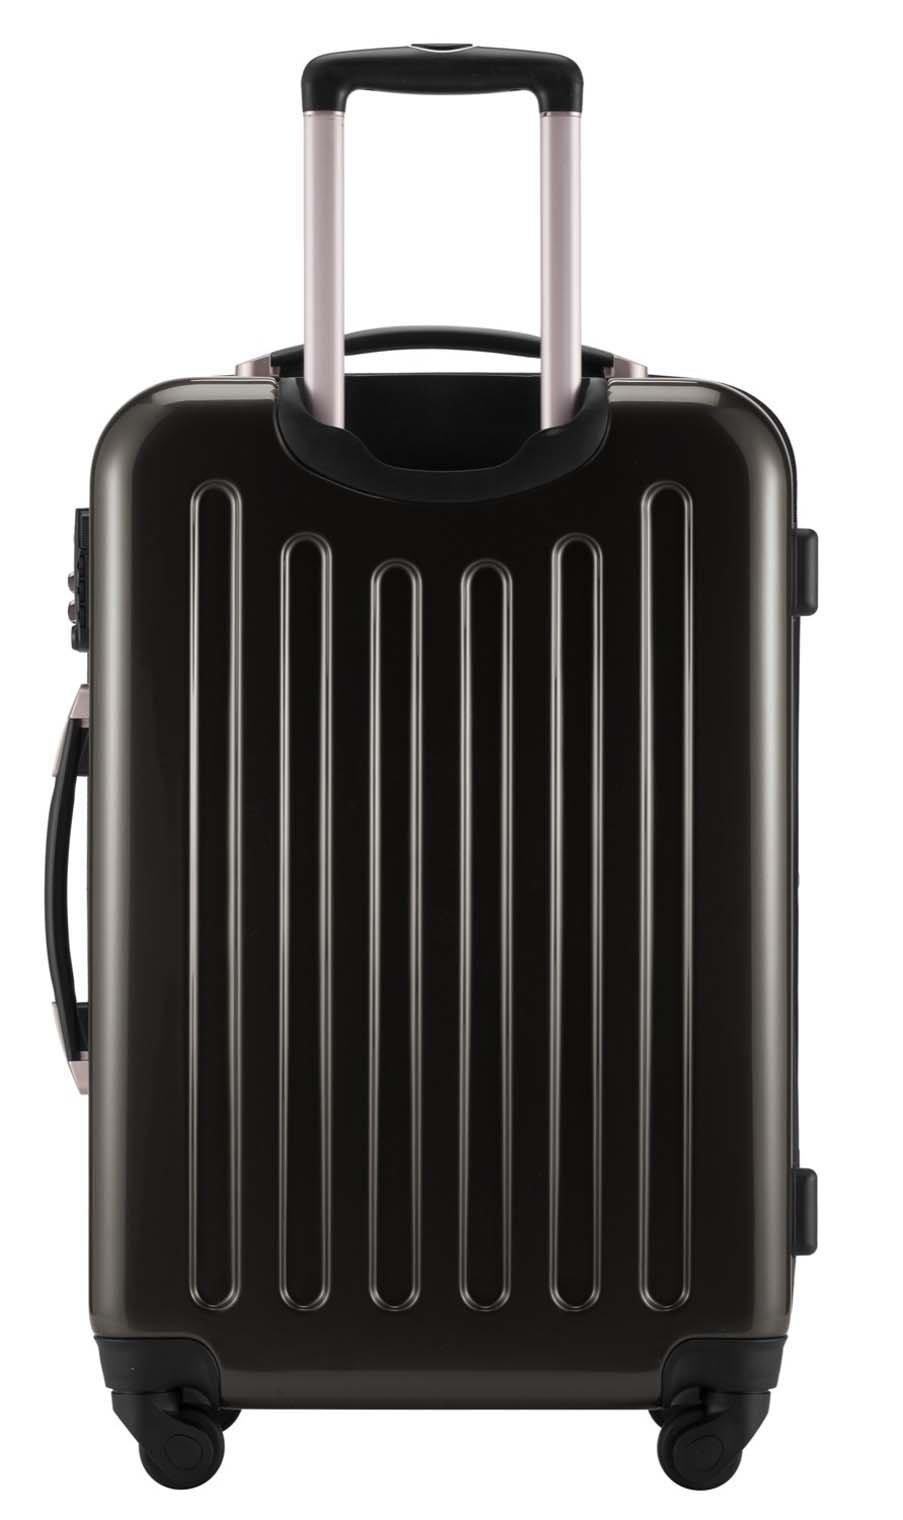 Hauptstadtkoffer  Alex bagage à main rigide surface brillante graphite 